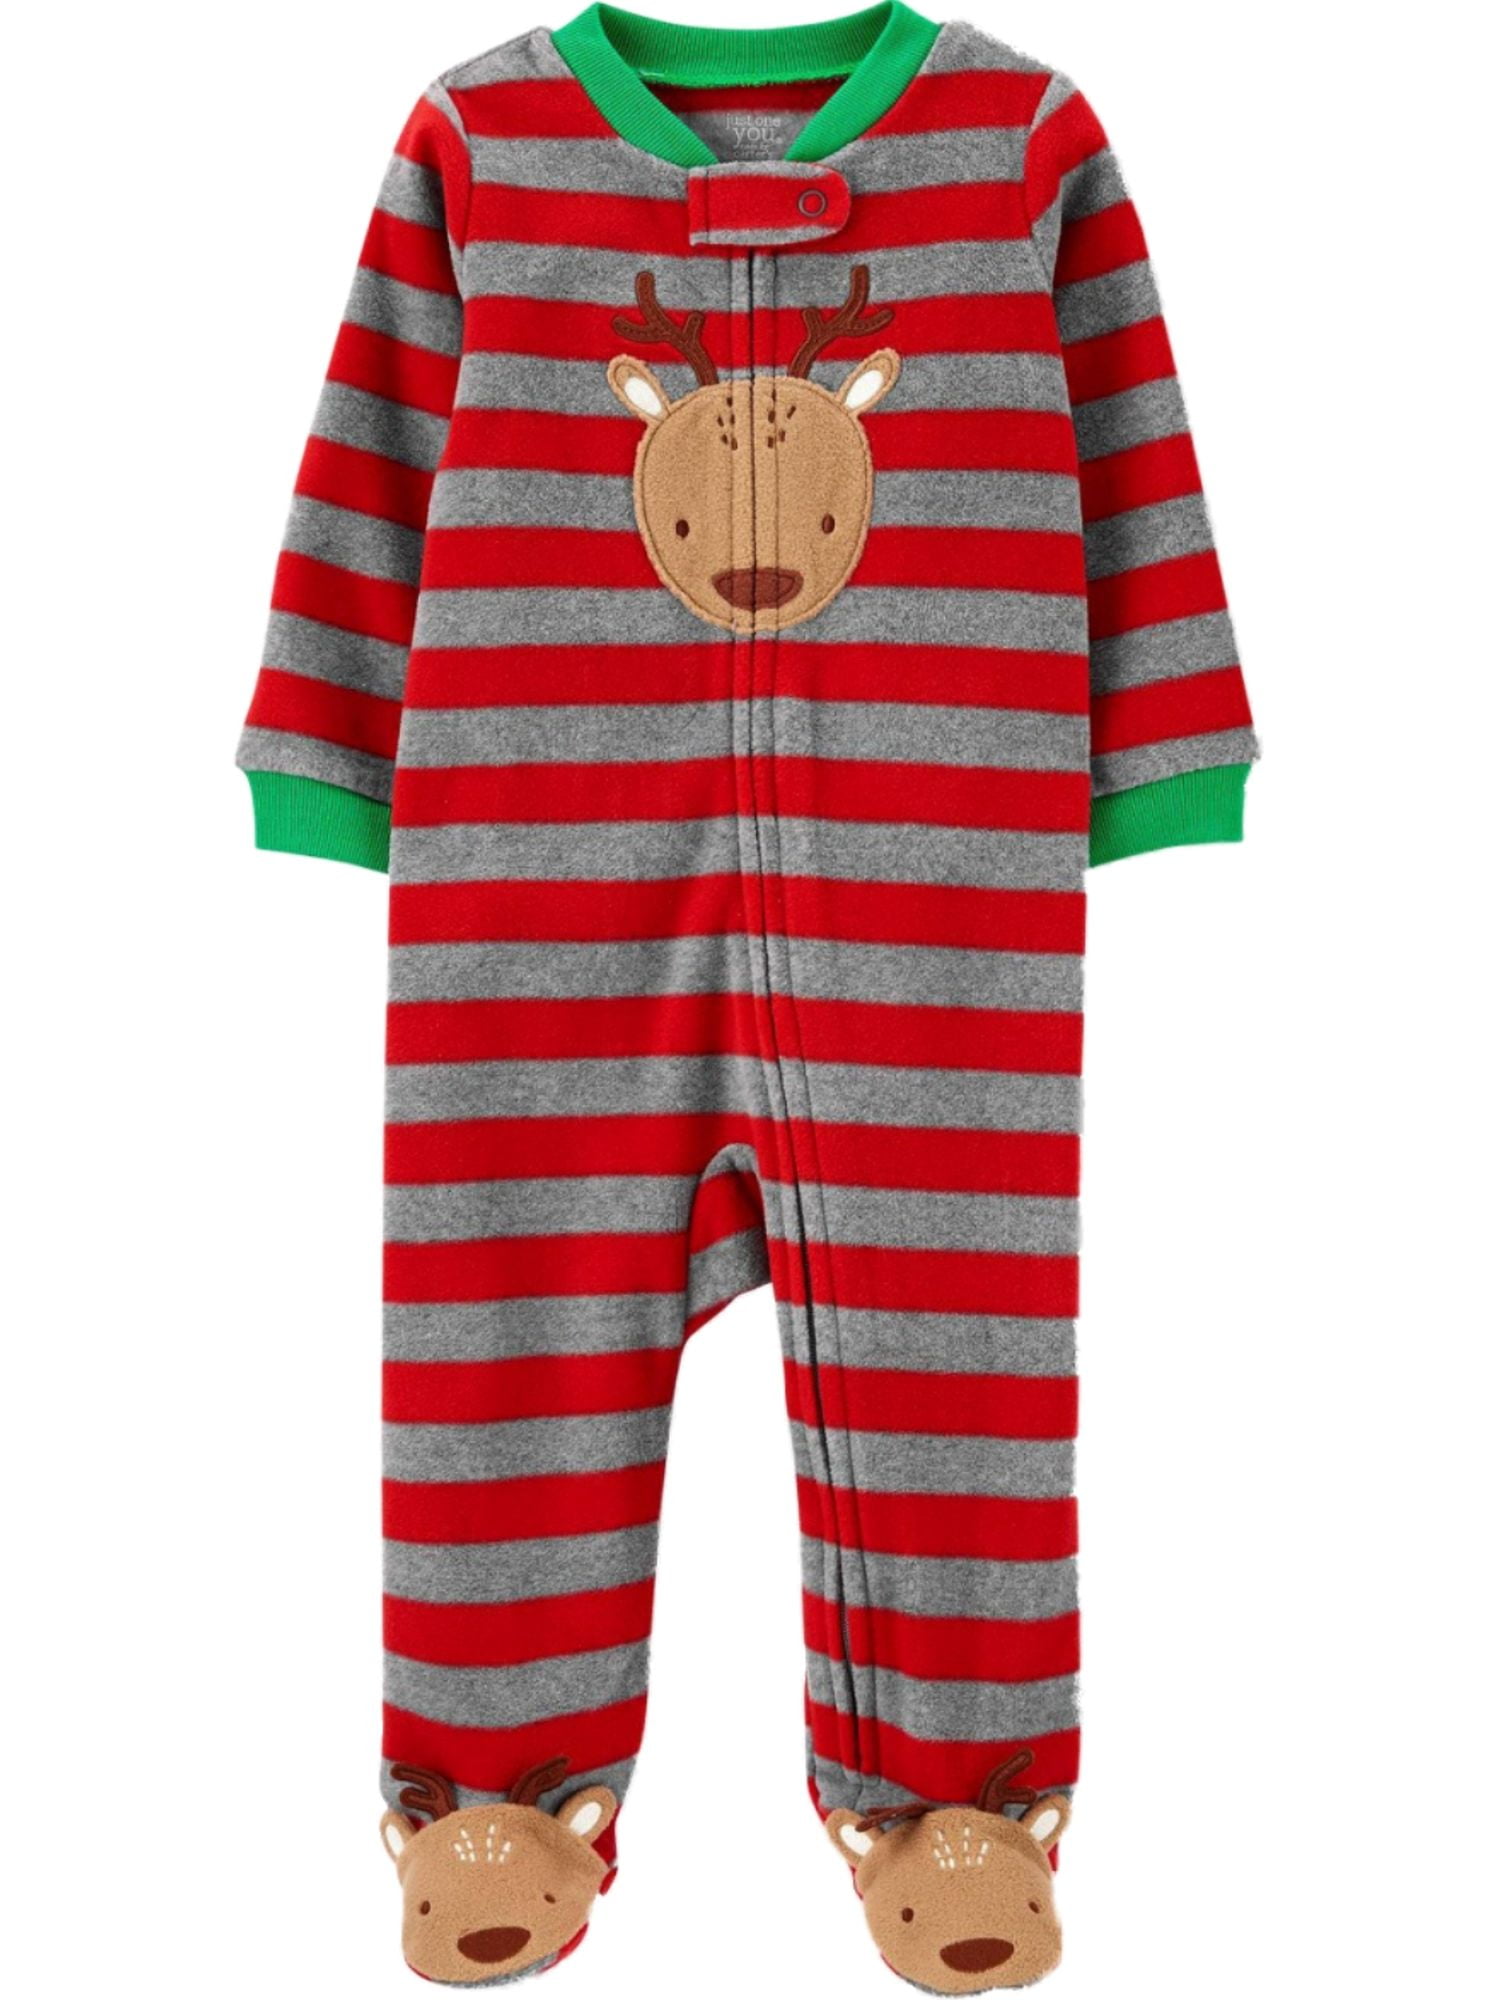 Carters Infant Boys Red Stripe Fleece Christmas Reindeer Pajama Sleeper 